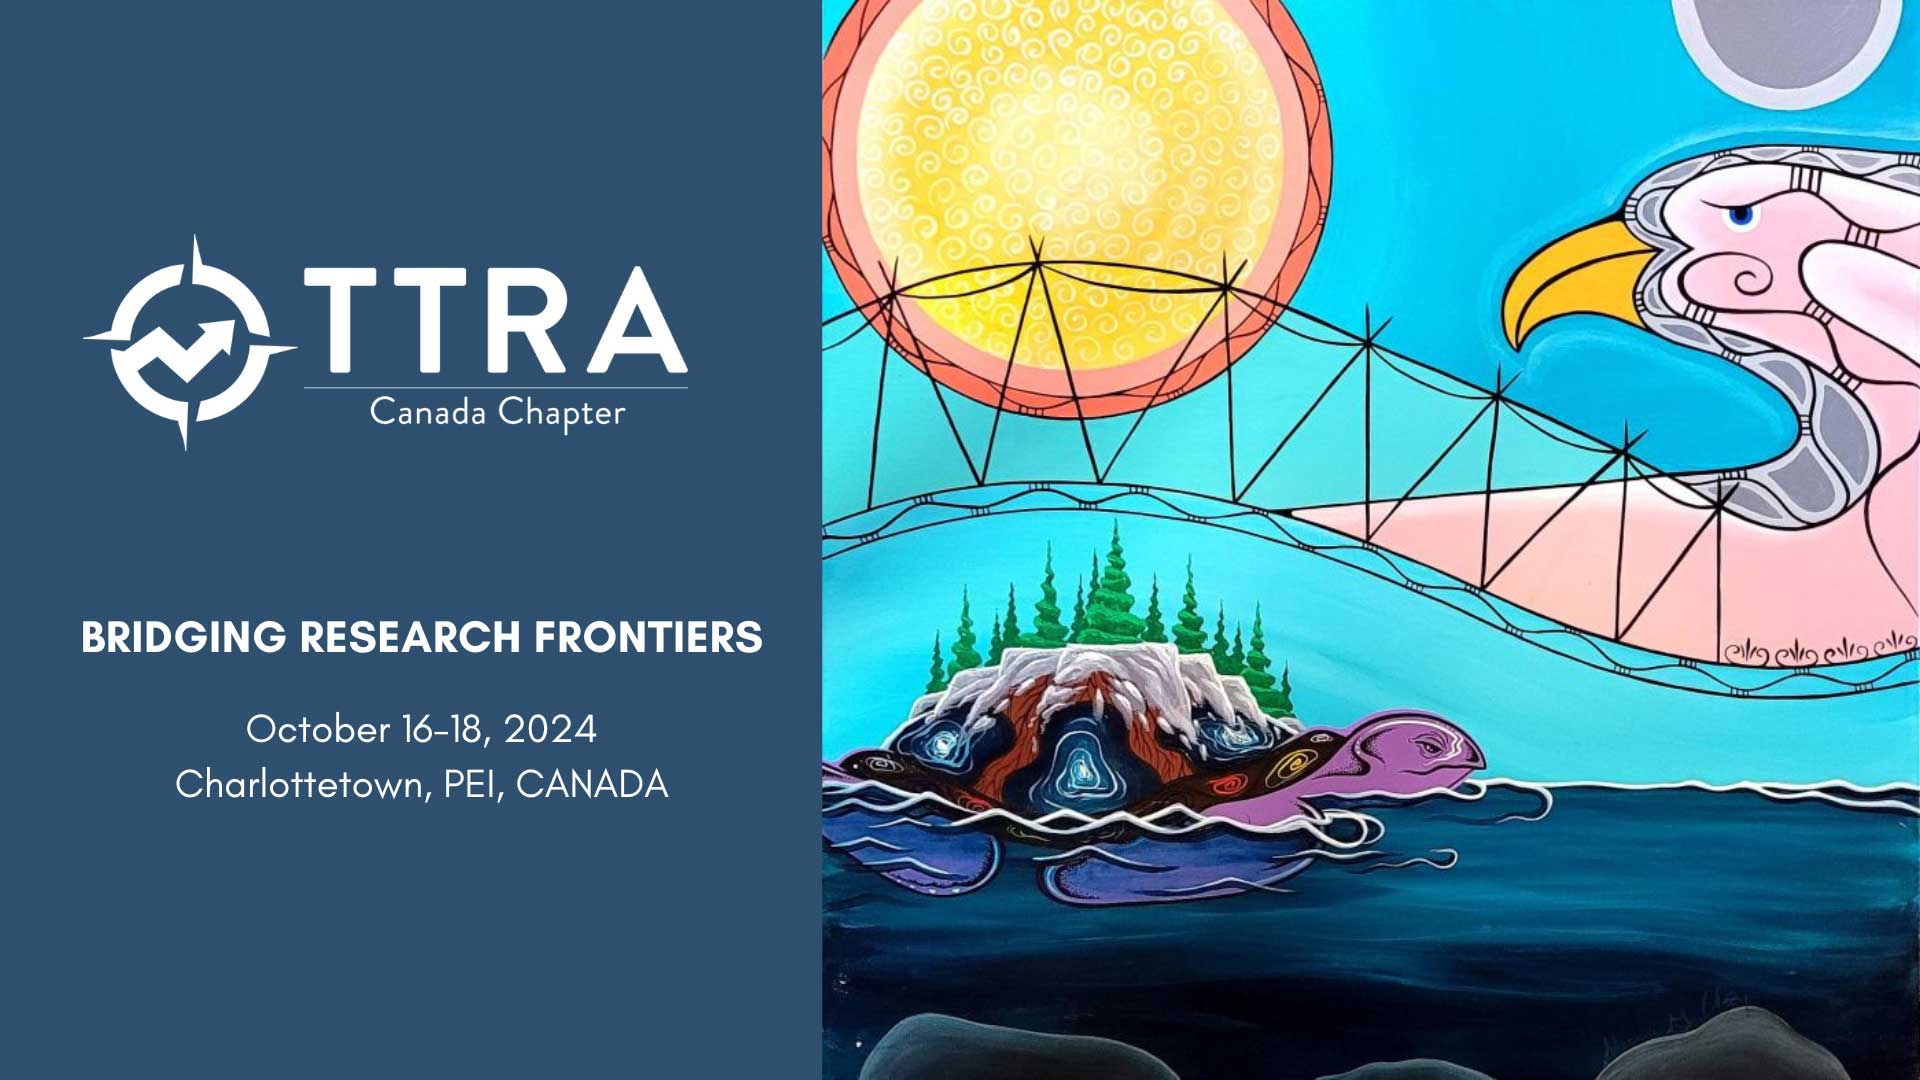 TTRA Canada Conference 2024 - Charlottetown, PEI